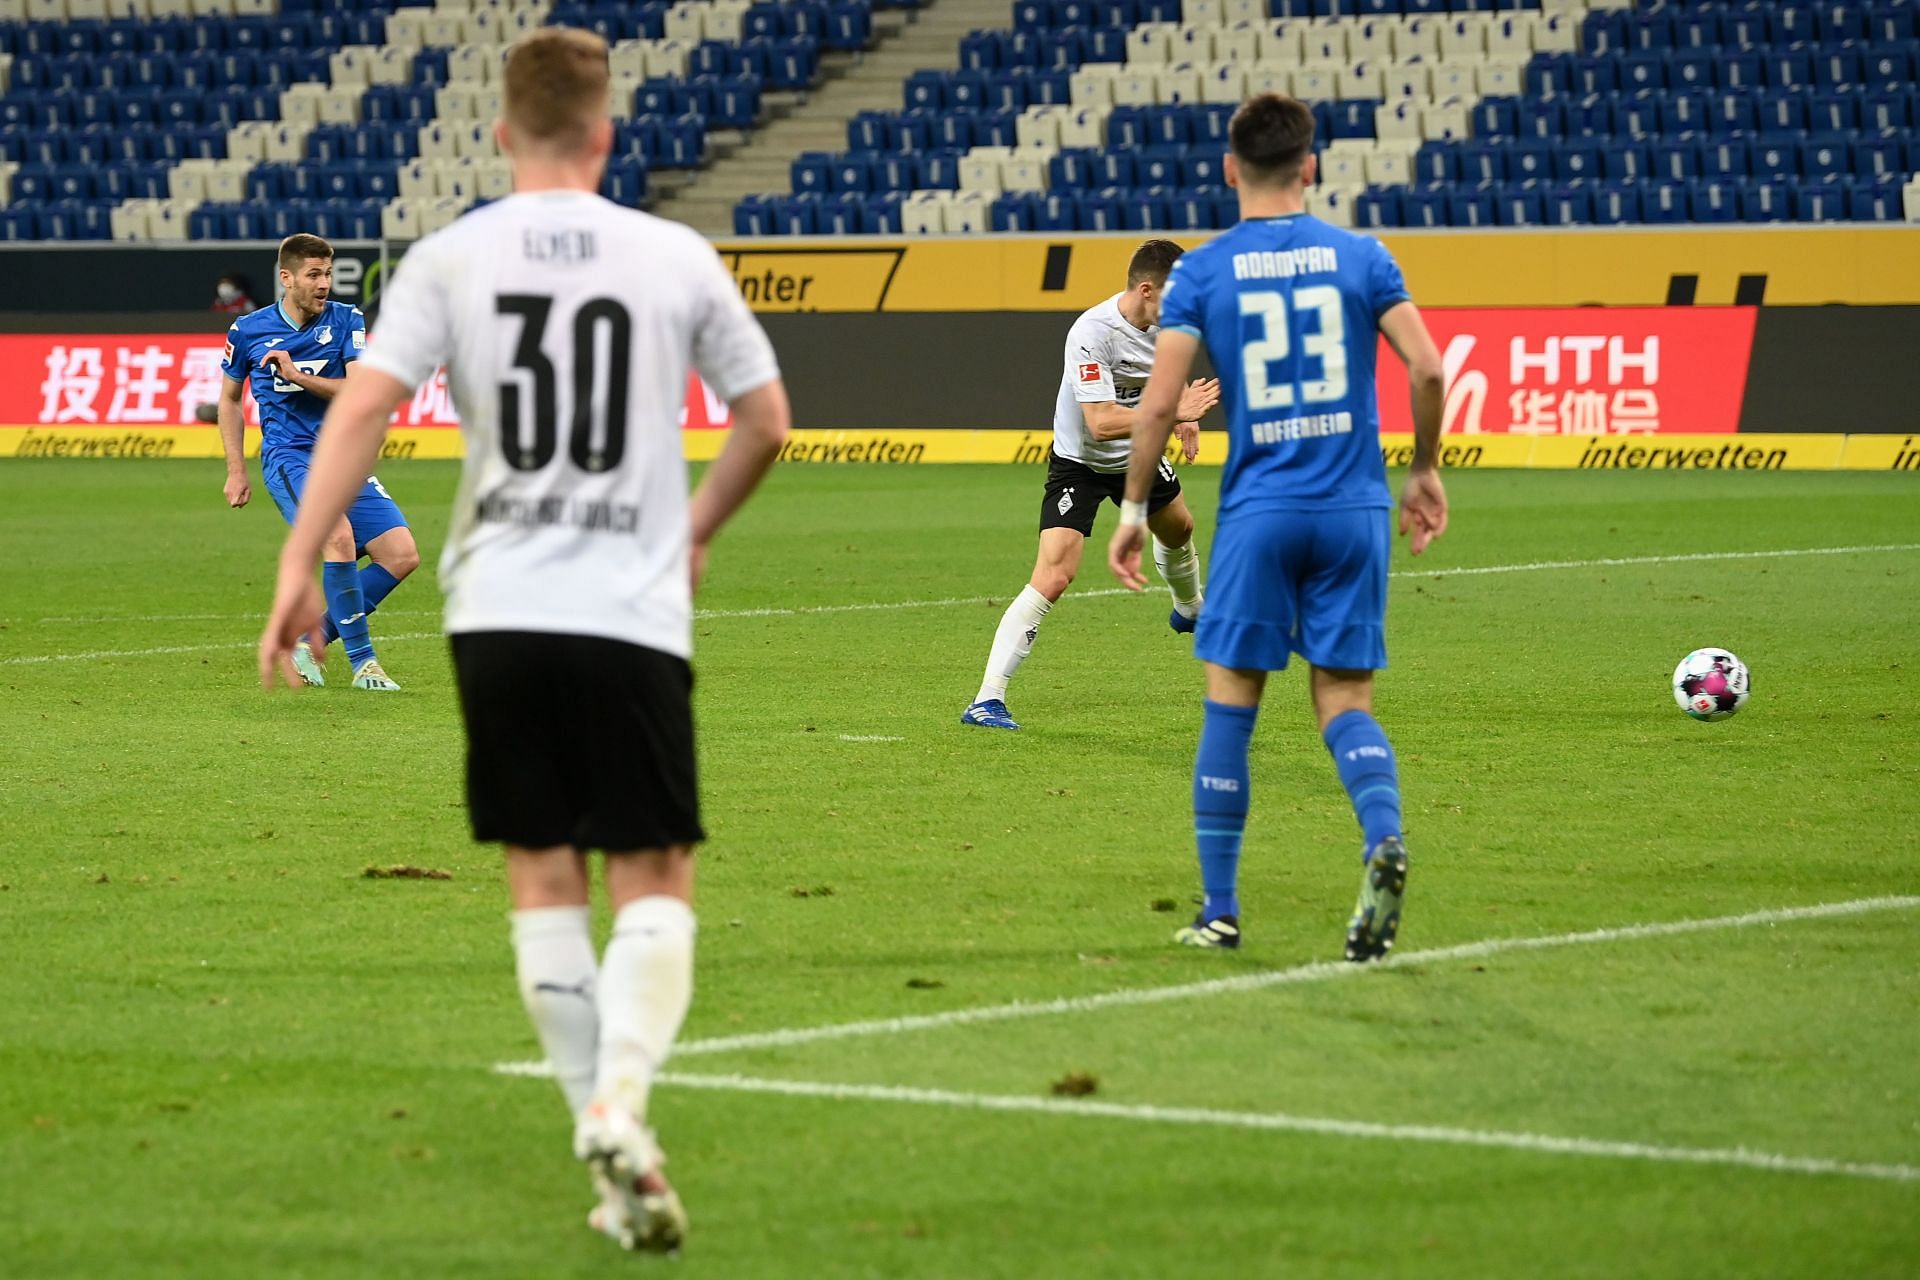 Hoffenheim take on Borussia Monchengladbach this weekend